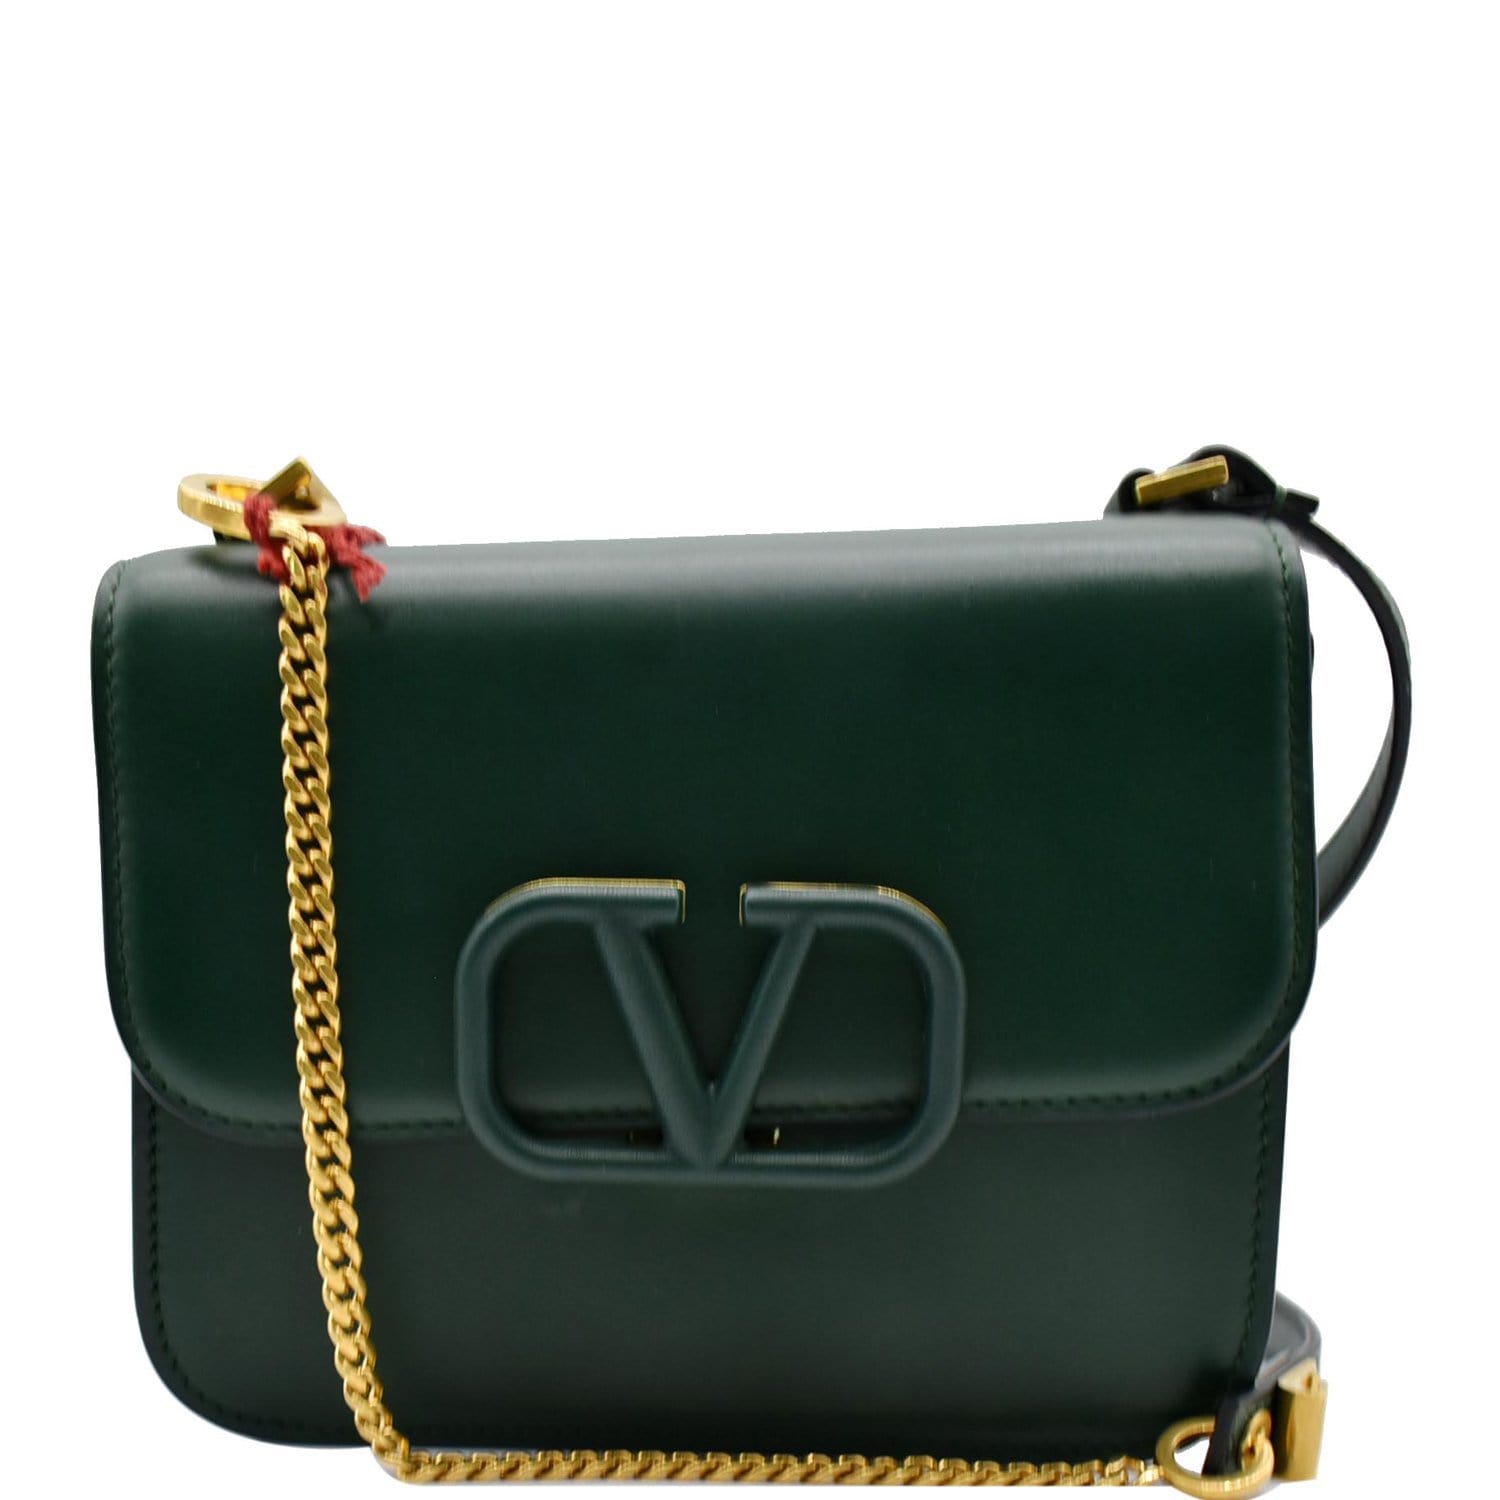 15 Best Valentino Garavani Bags: Valentino Garavani Handbags & Purses